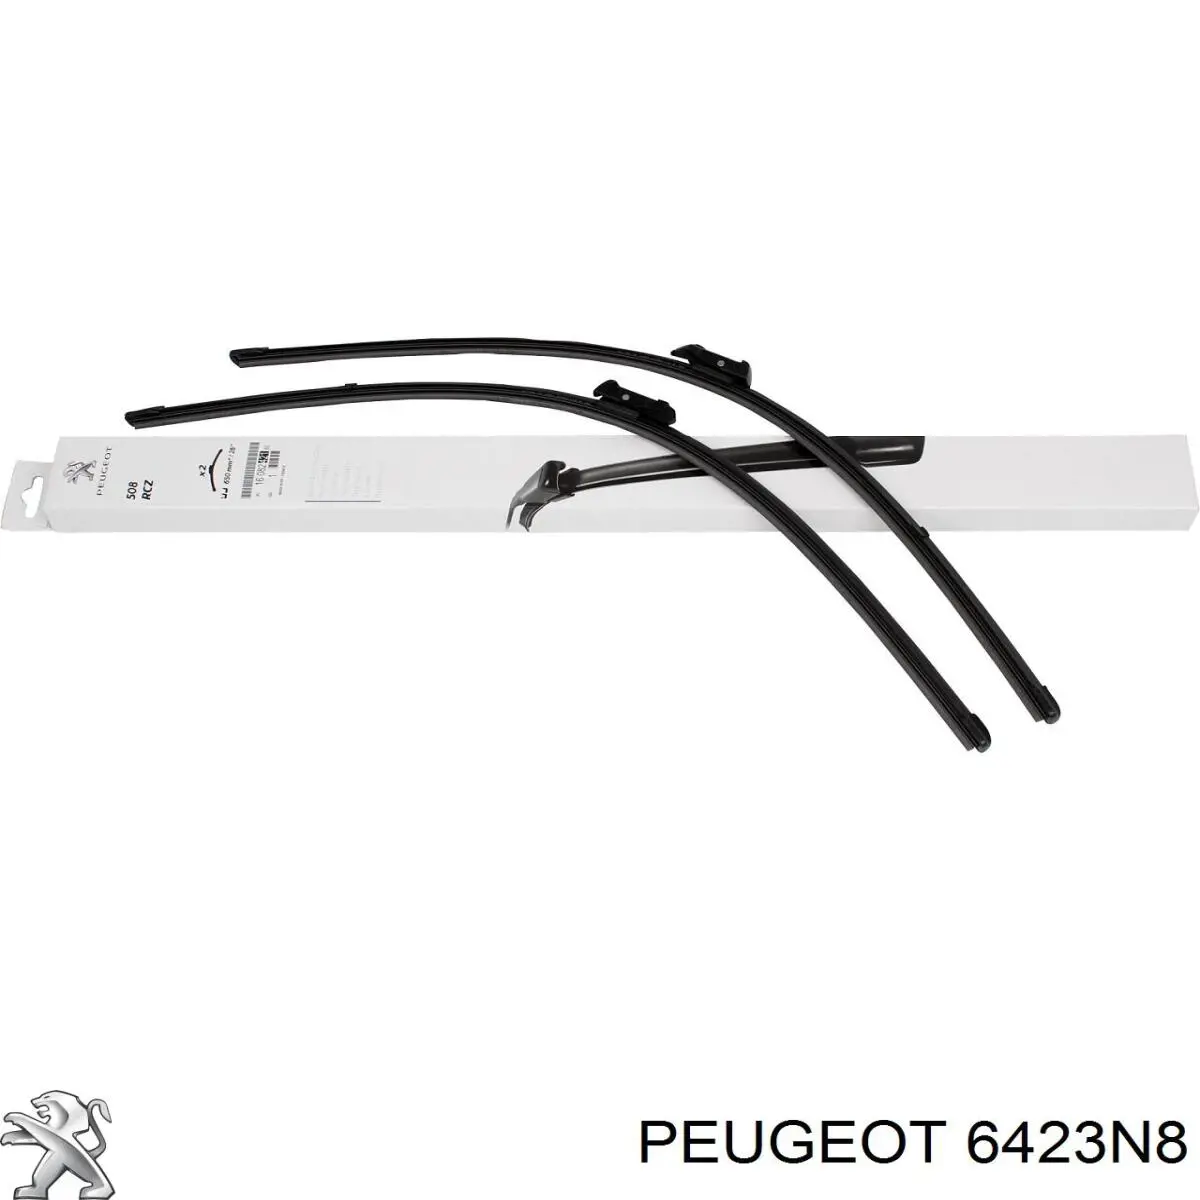 6423N8 Peugeot/Citroen limpiaparabrisas